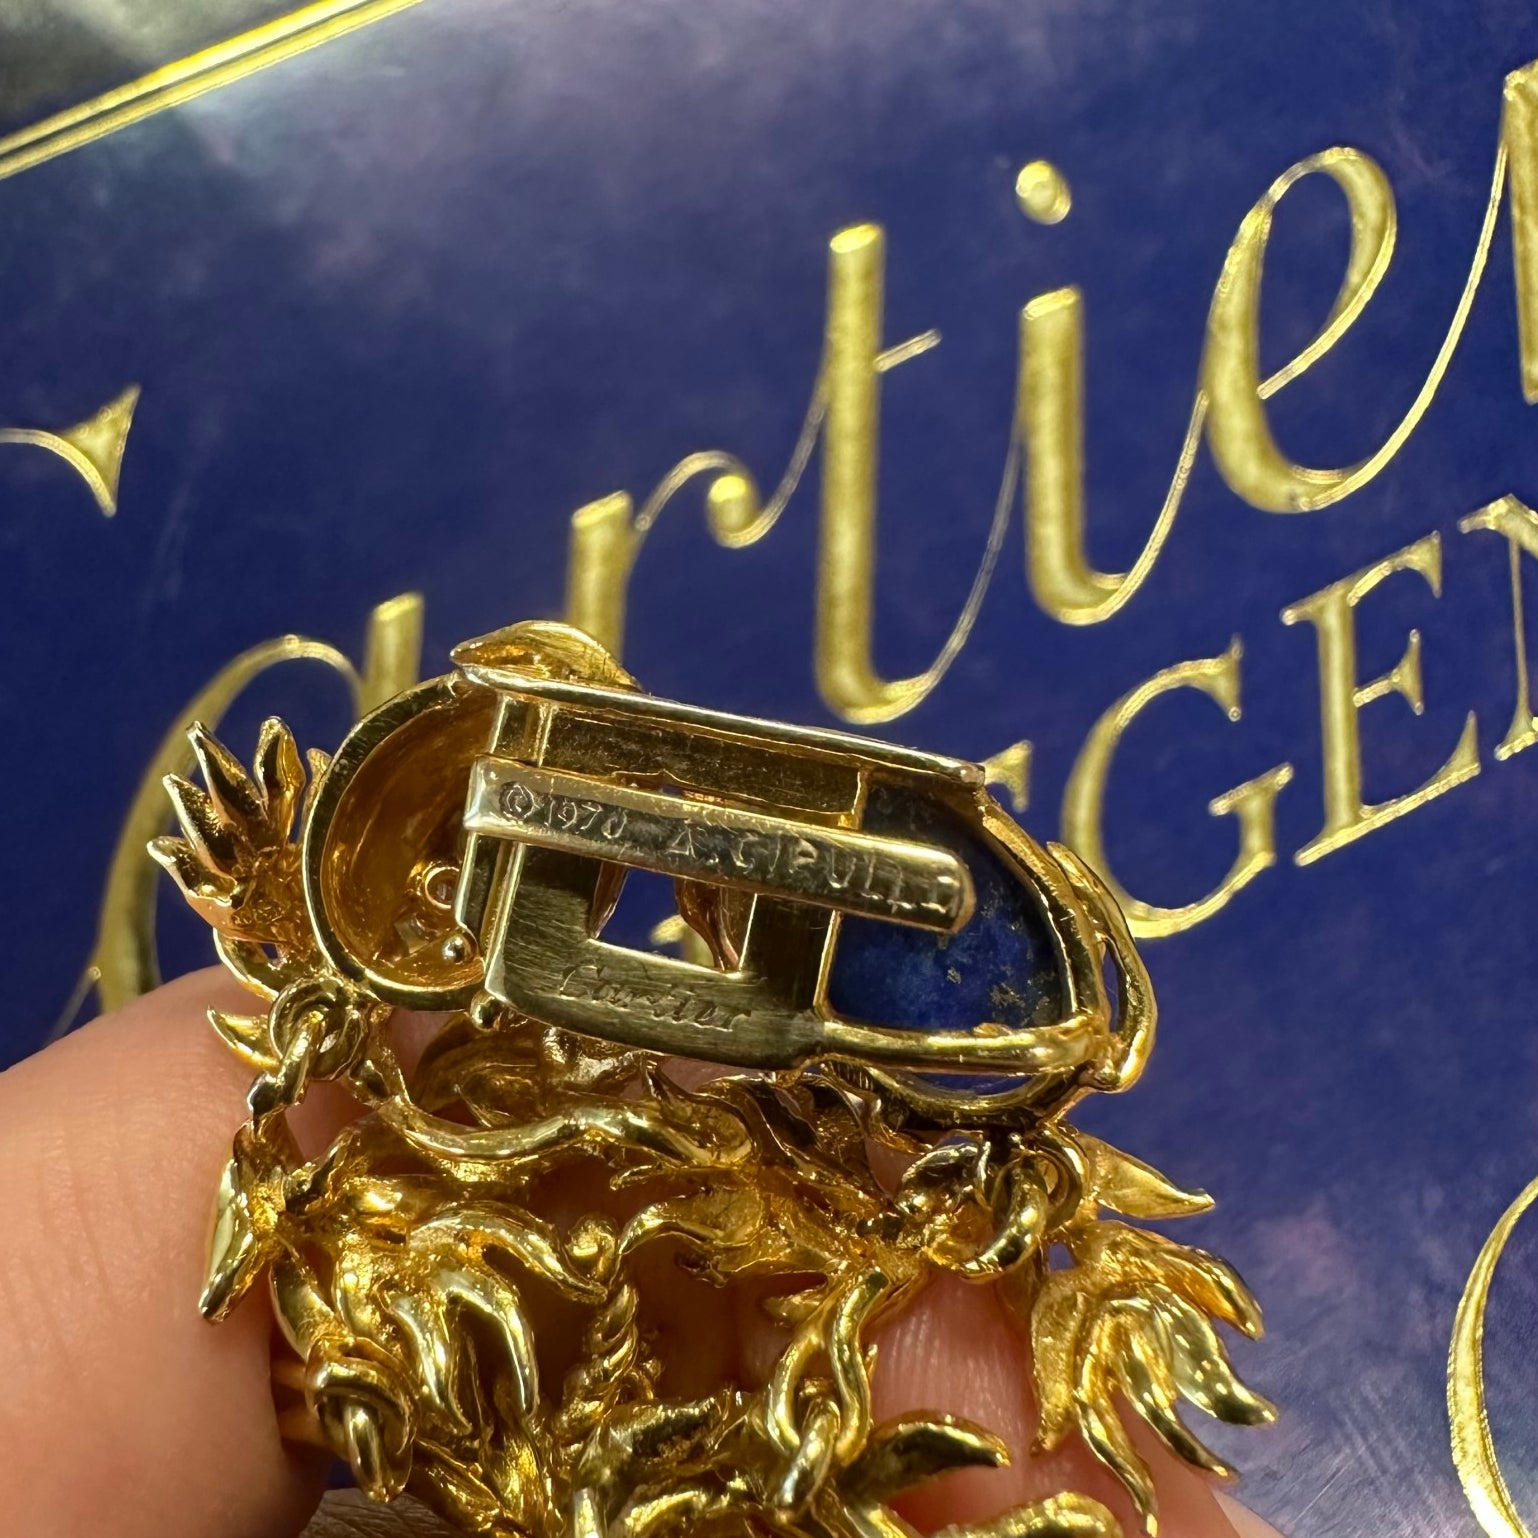 Cartier Aldo Cipullo 1970s 18KT Yellow Gold Lapis Lazuli & Diamond Bracelet close-up of clasp and signature